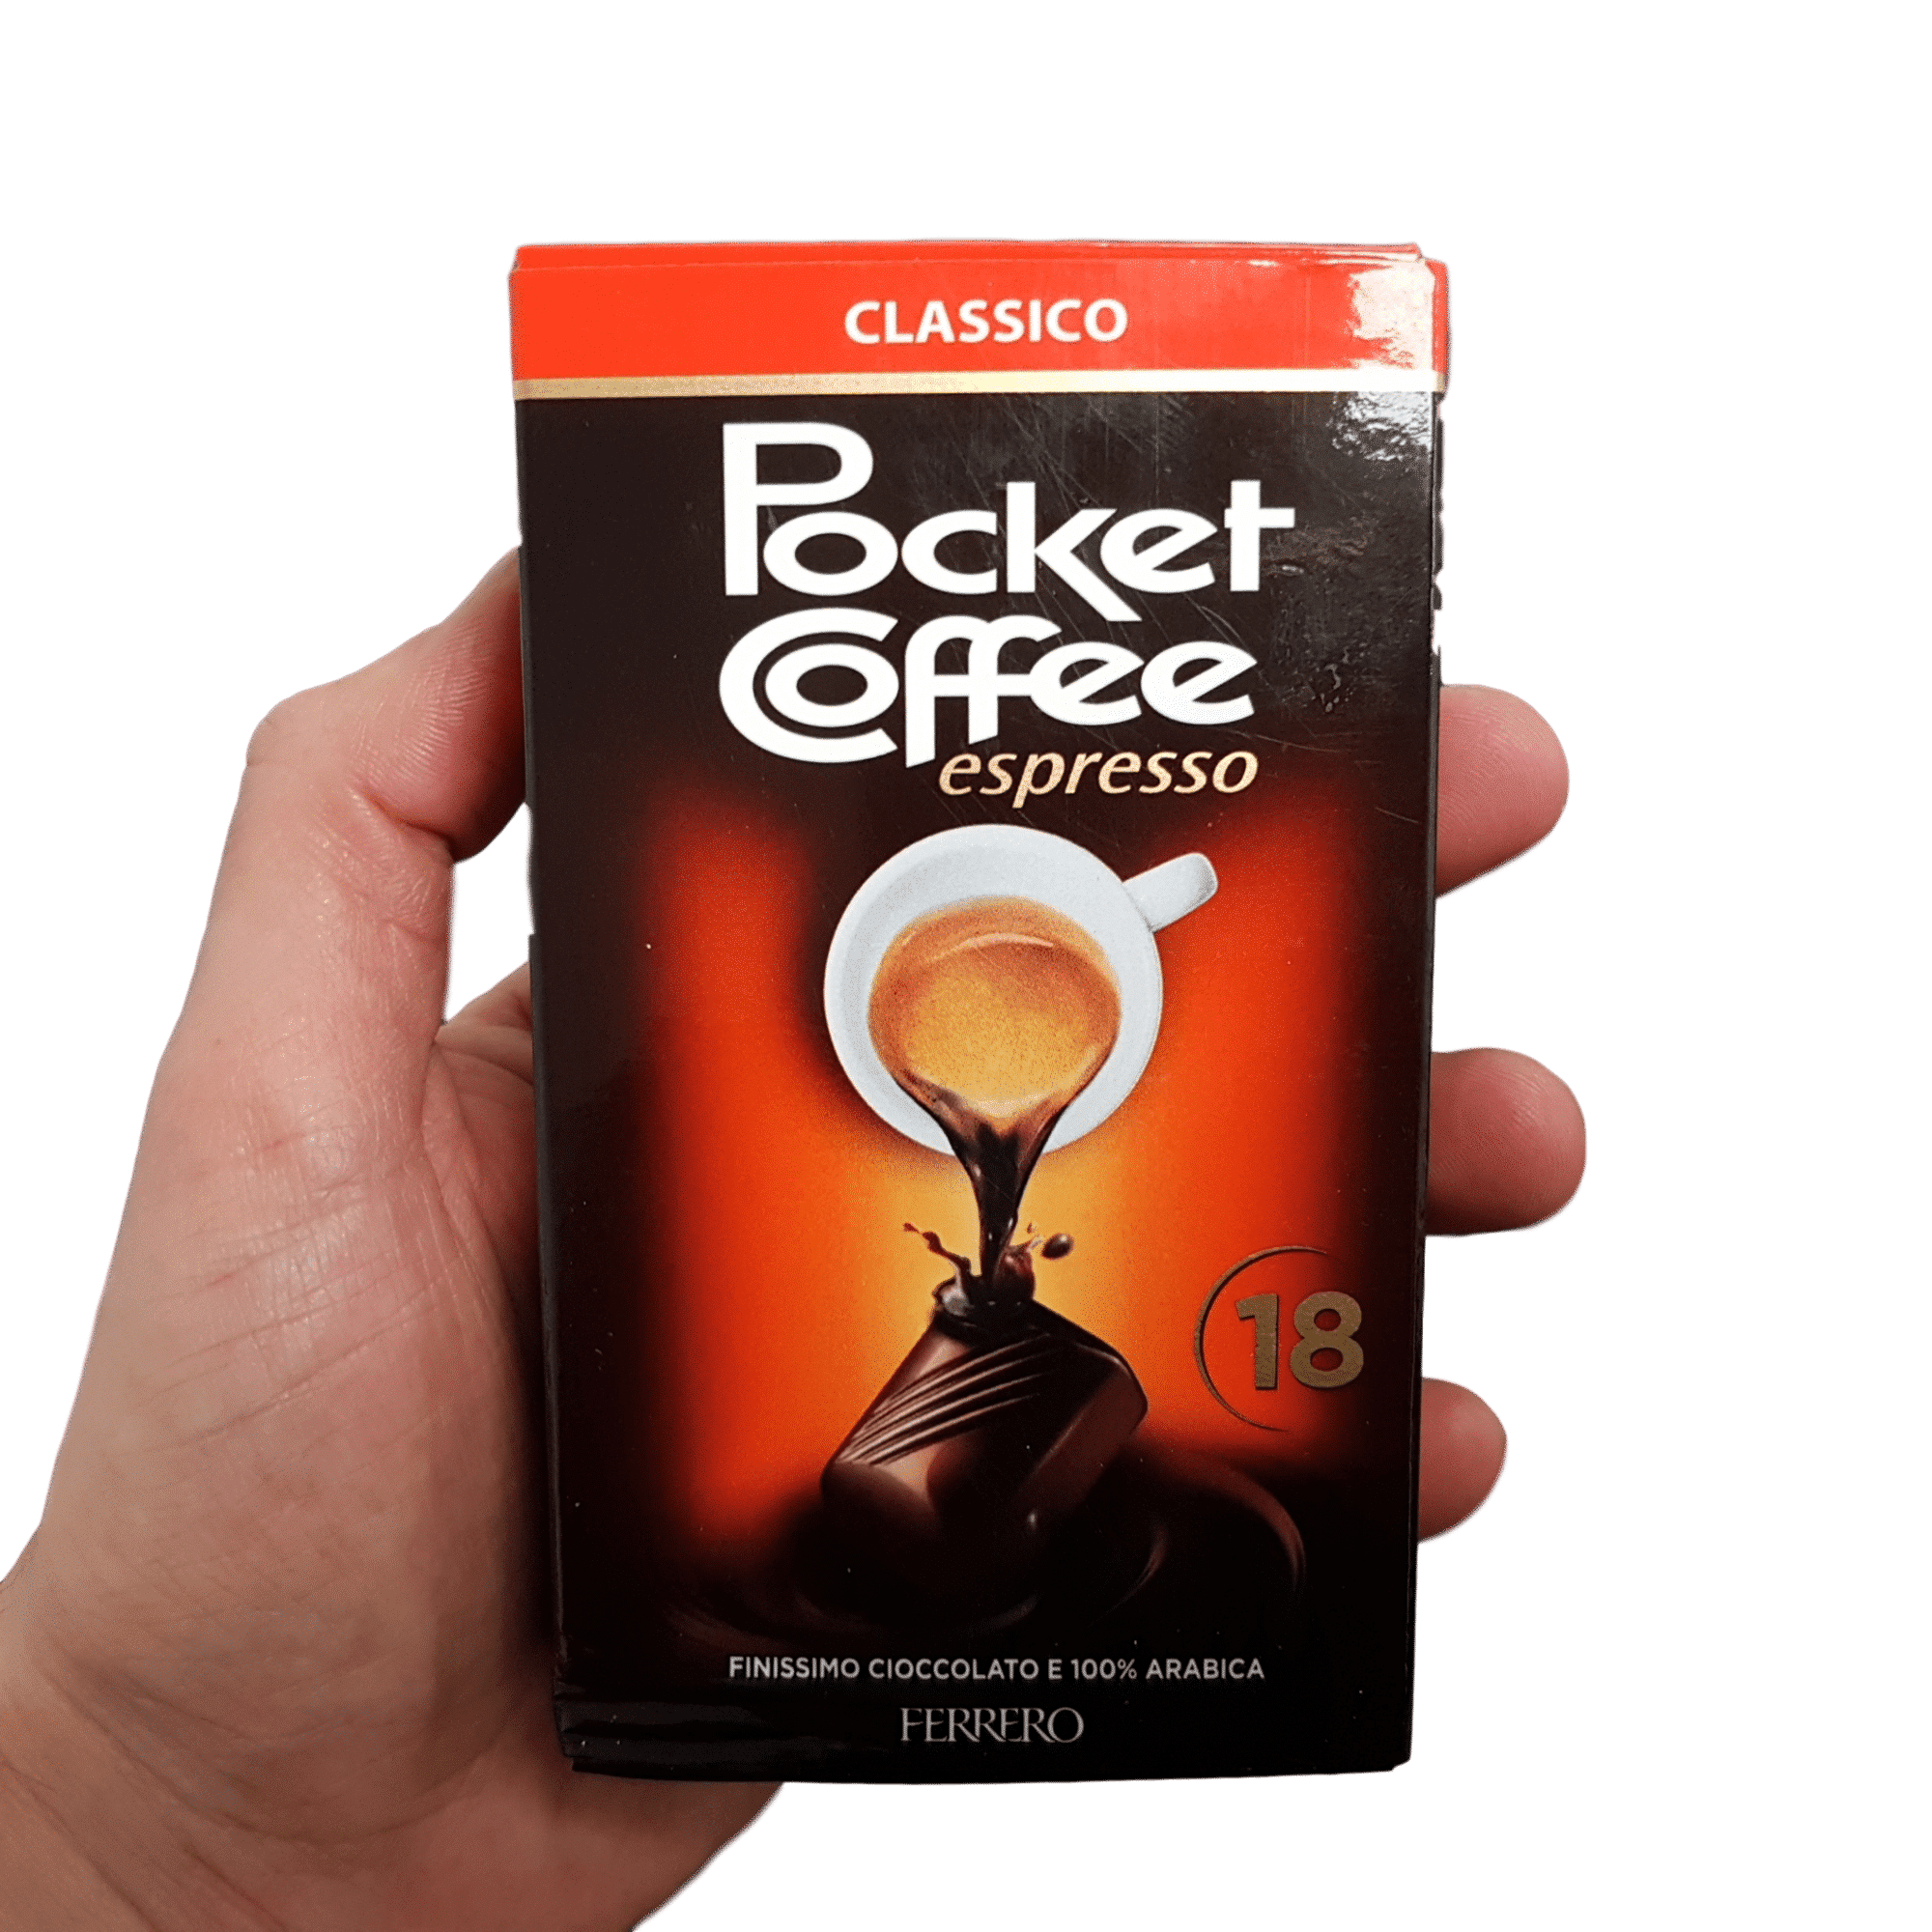 Pocket Coffee Espresso editorial stock photo. Image of name - 91513338